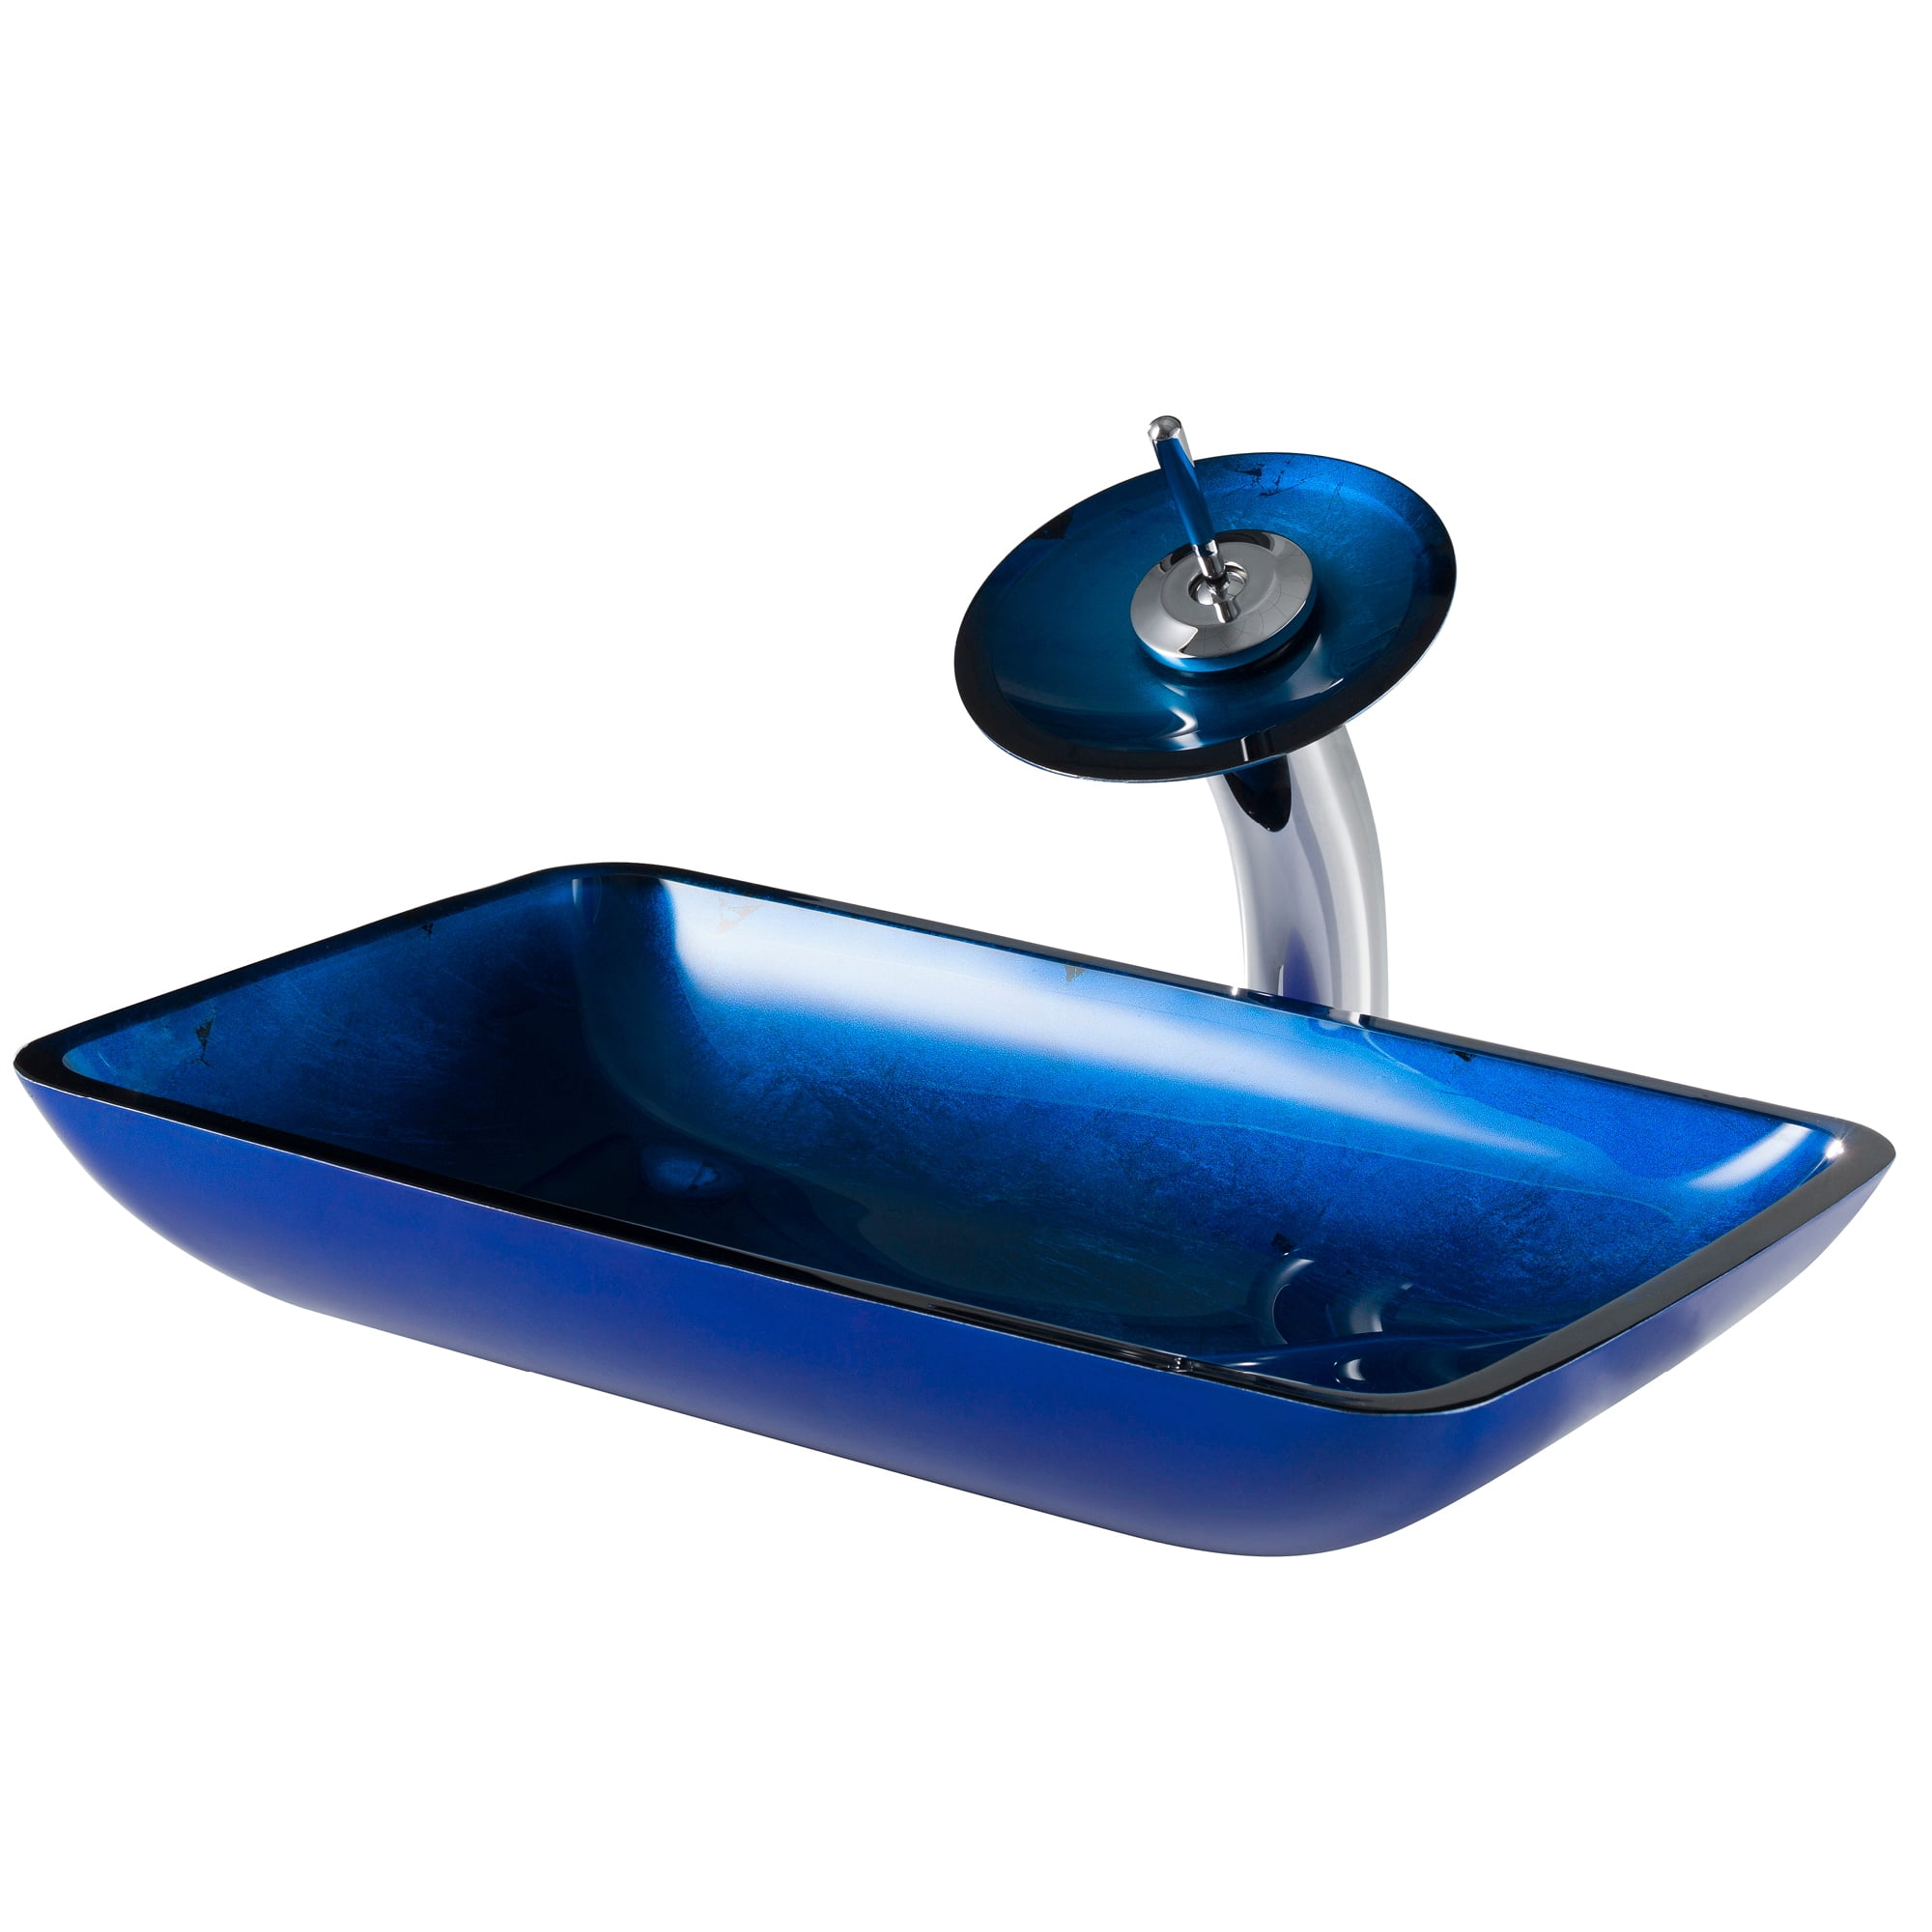 Bathroom Gold Ceramic Basin Round Sink Combo Mixer Waterfal Faucet Tap Drain Set